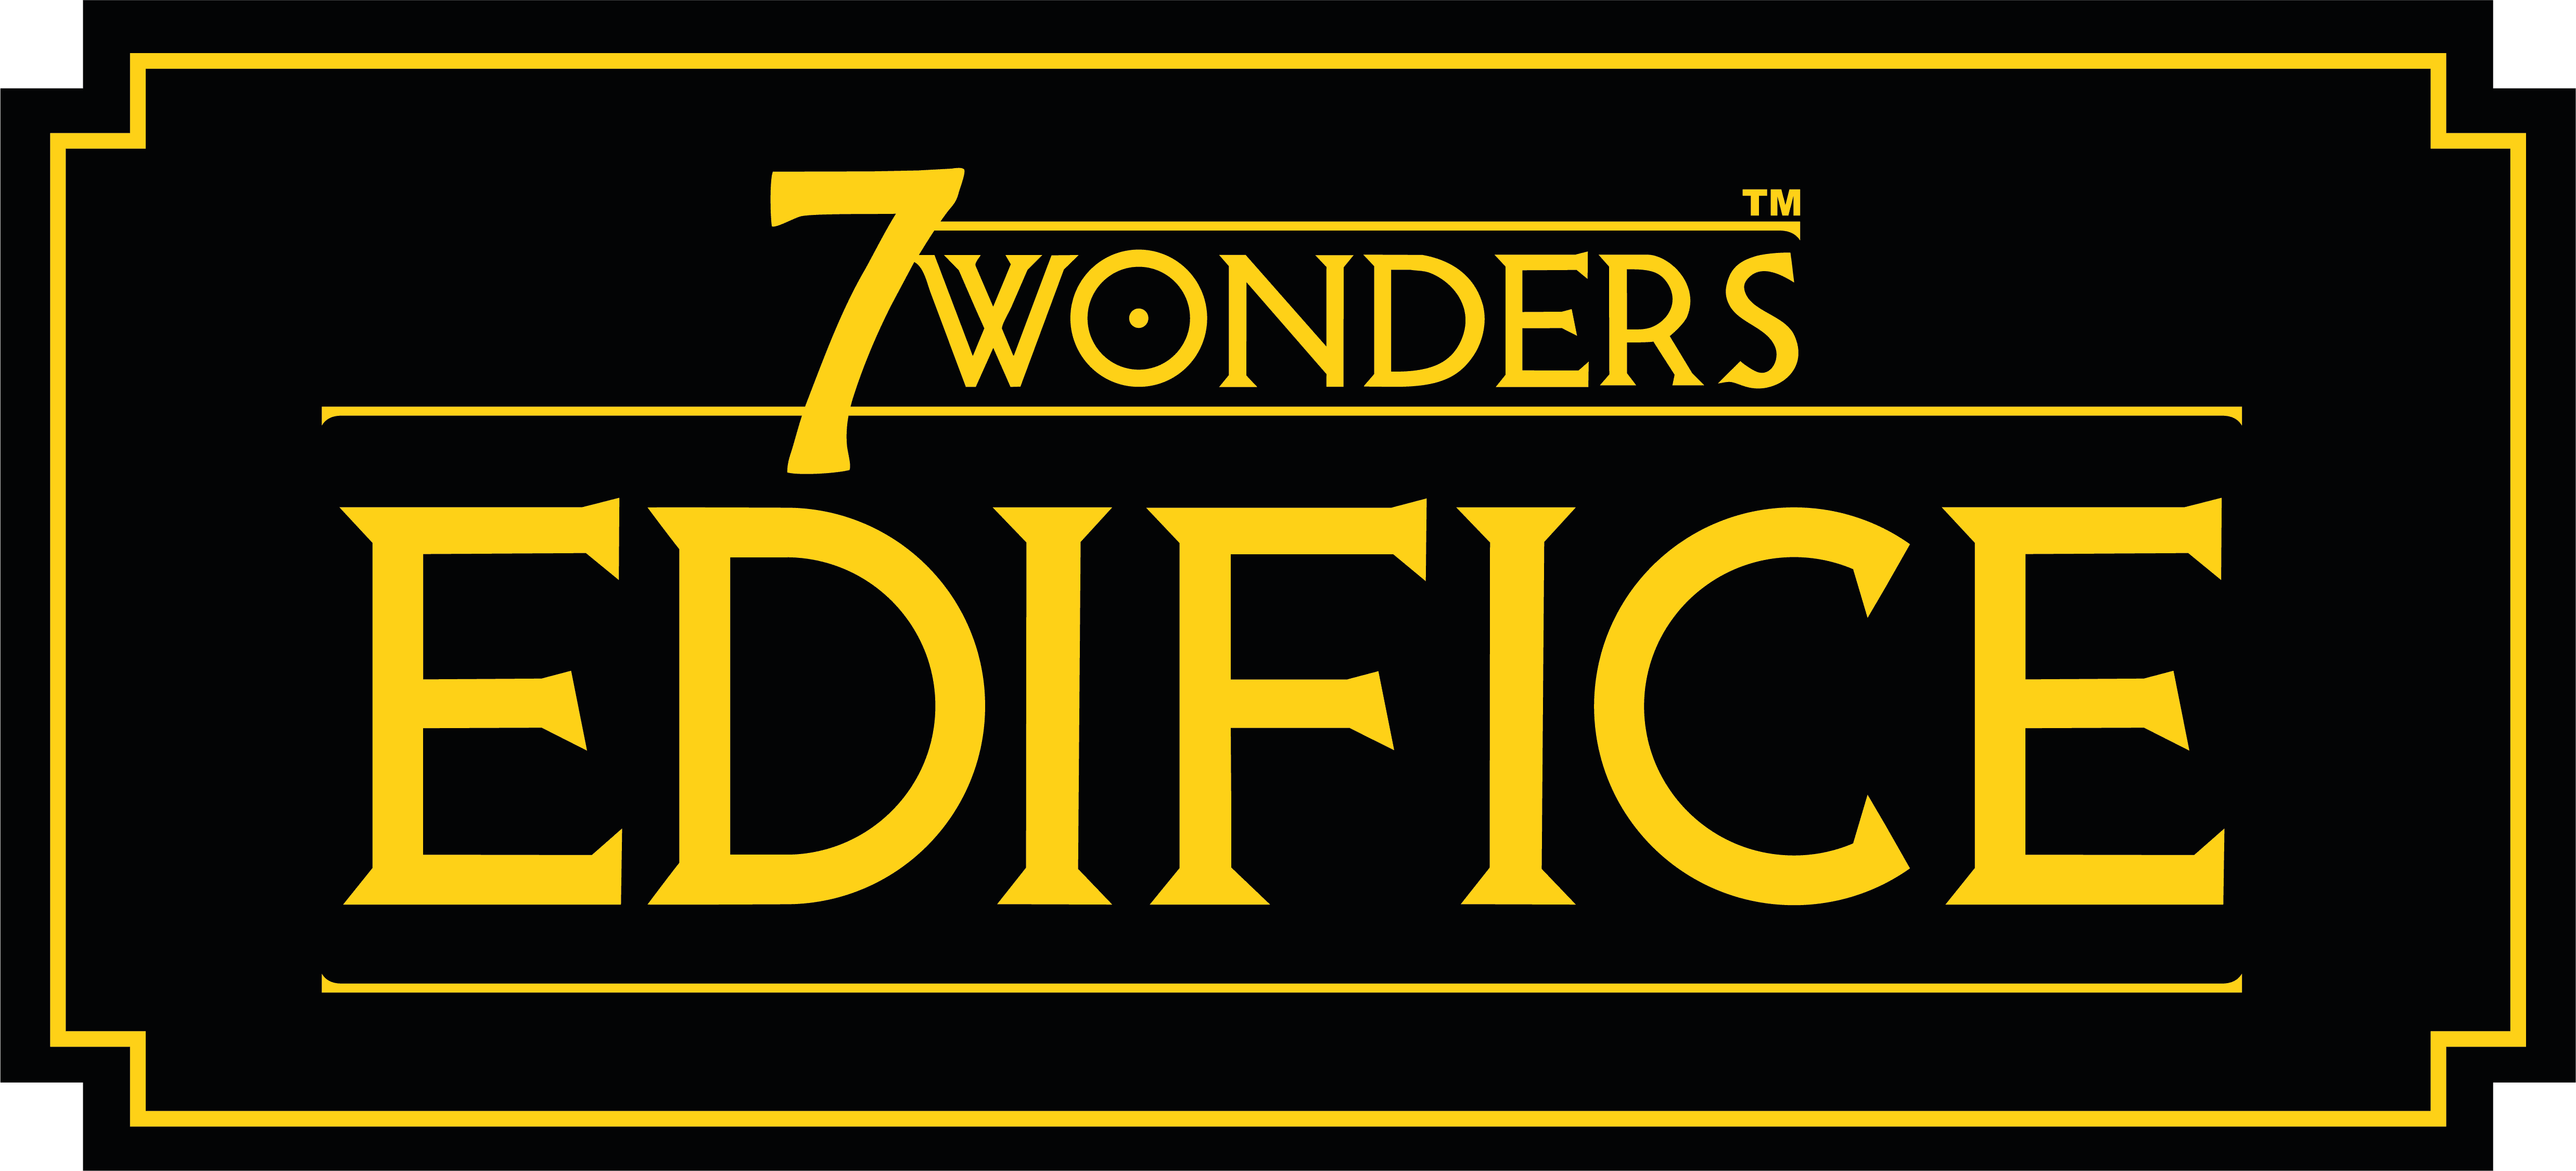 7 Wonders Edifice